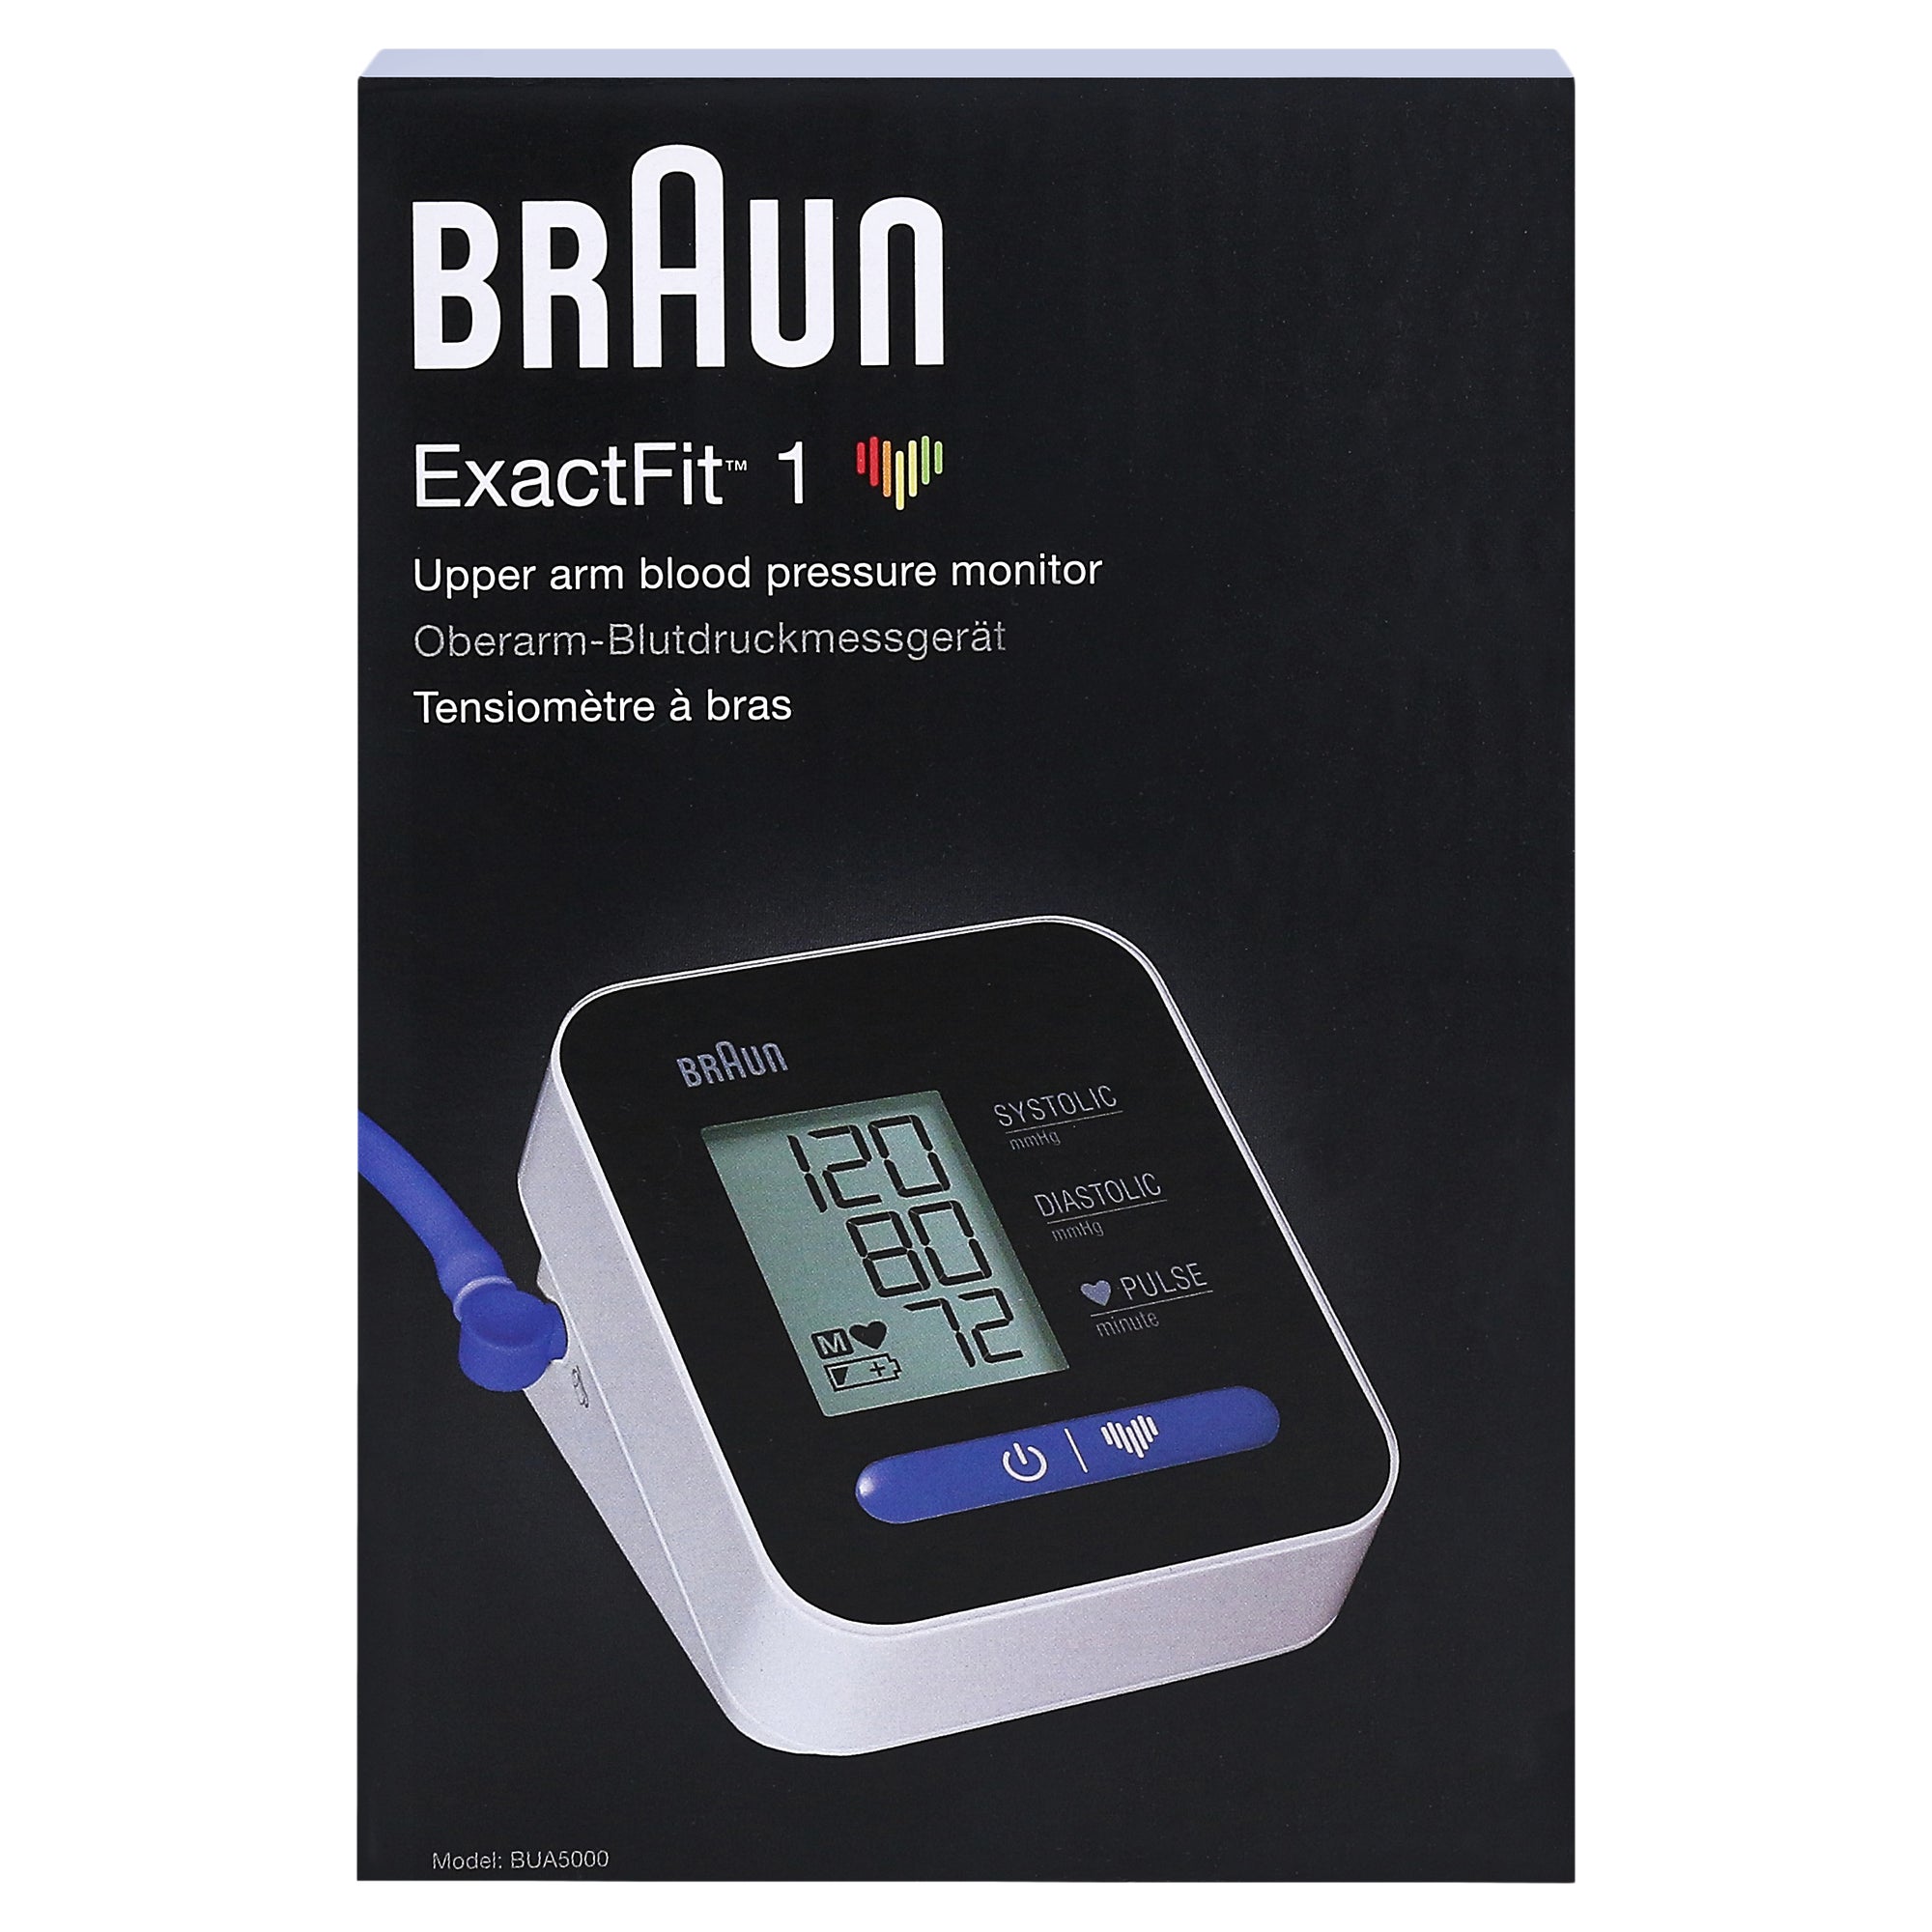 ExactFit 1 online Oberarm-Blutdruckmessgerät, St. 1 DocMorris | kaufen